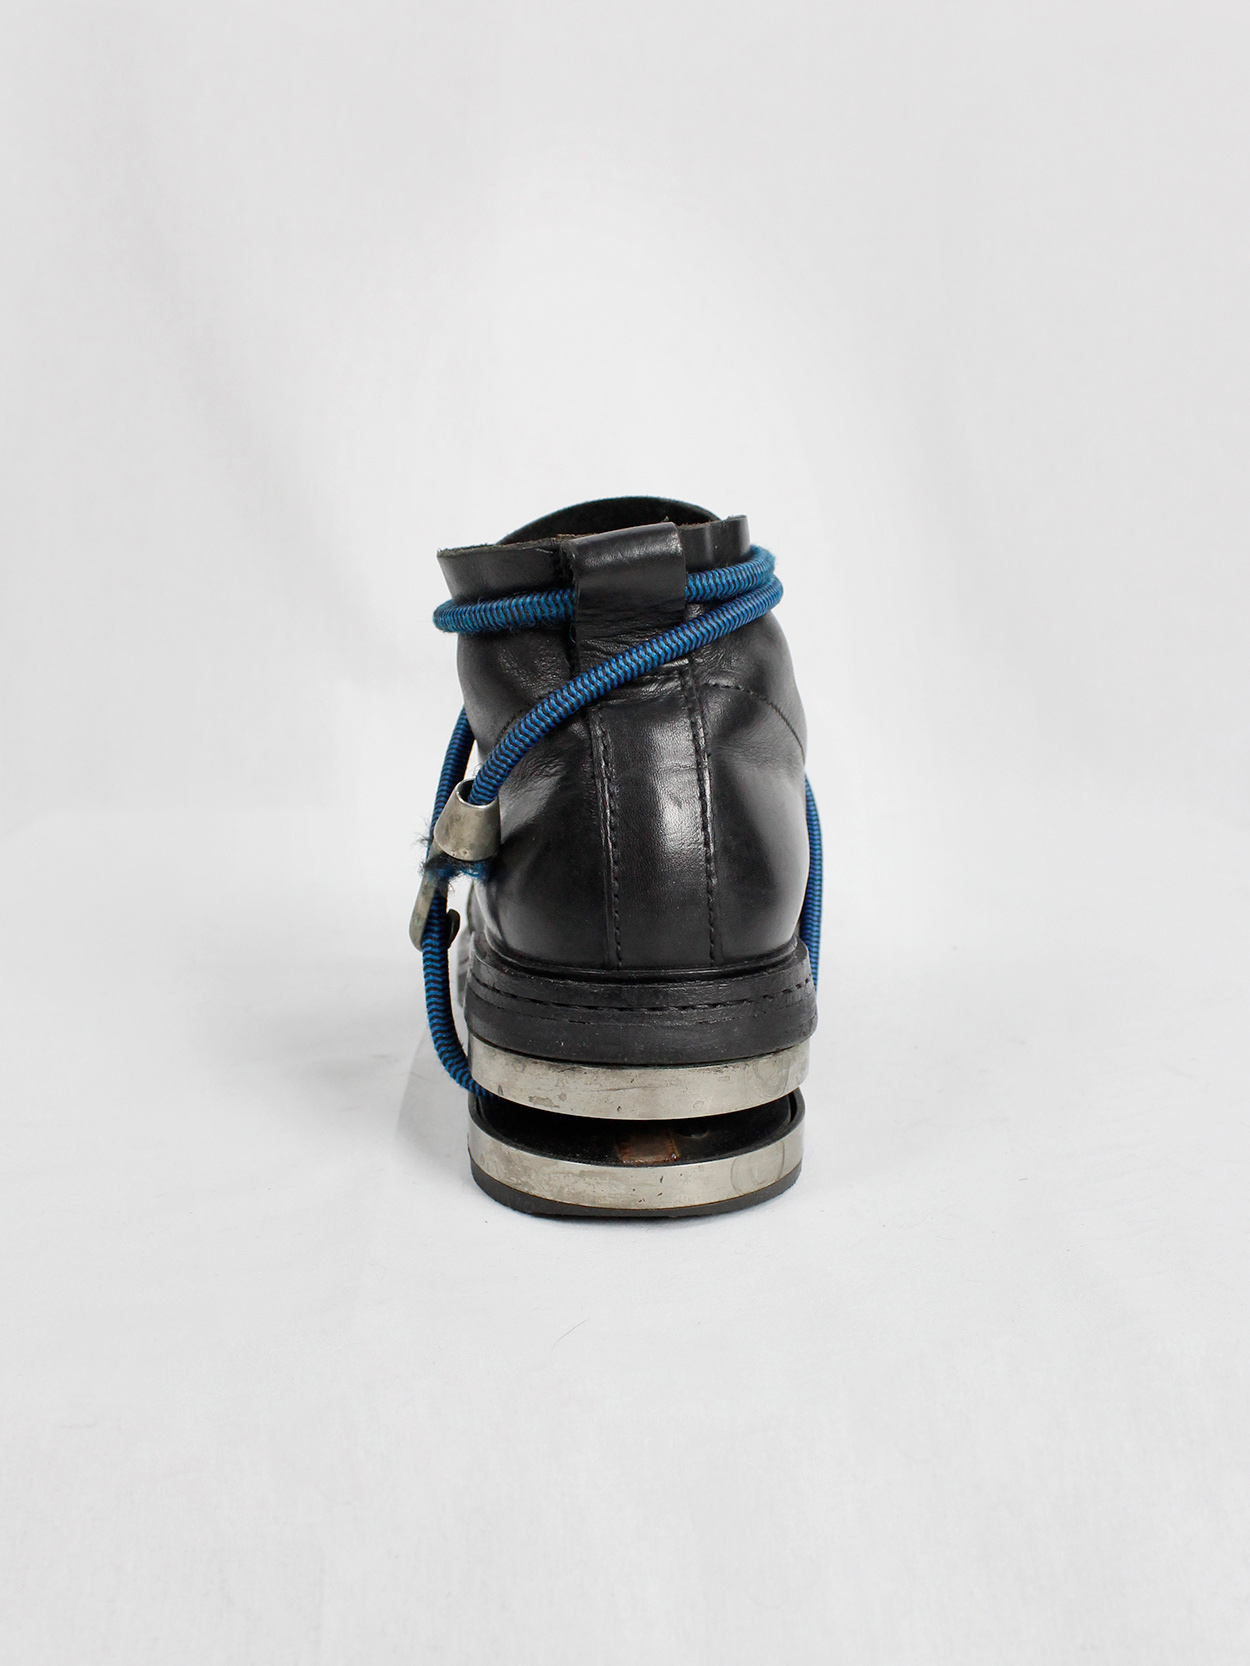 Dirk Bikkembergs black mountaineering boots with metal heel and blue ...